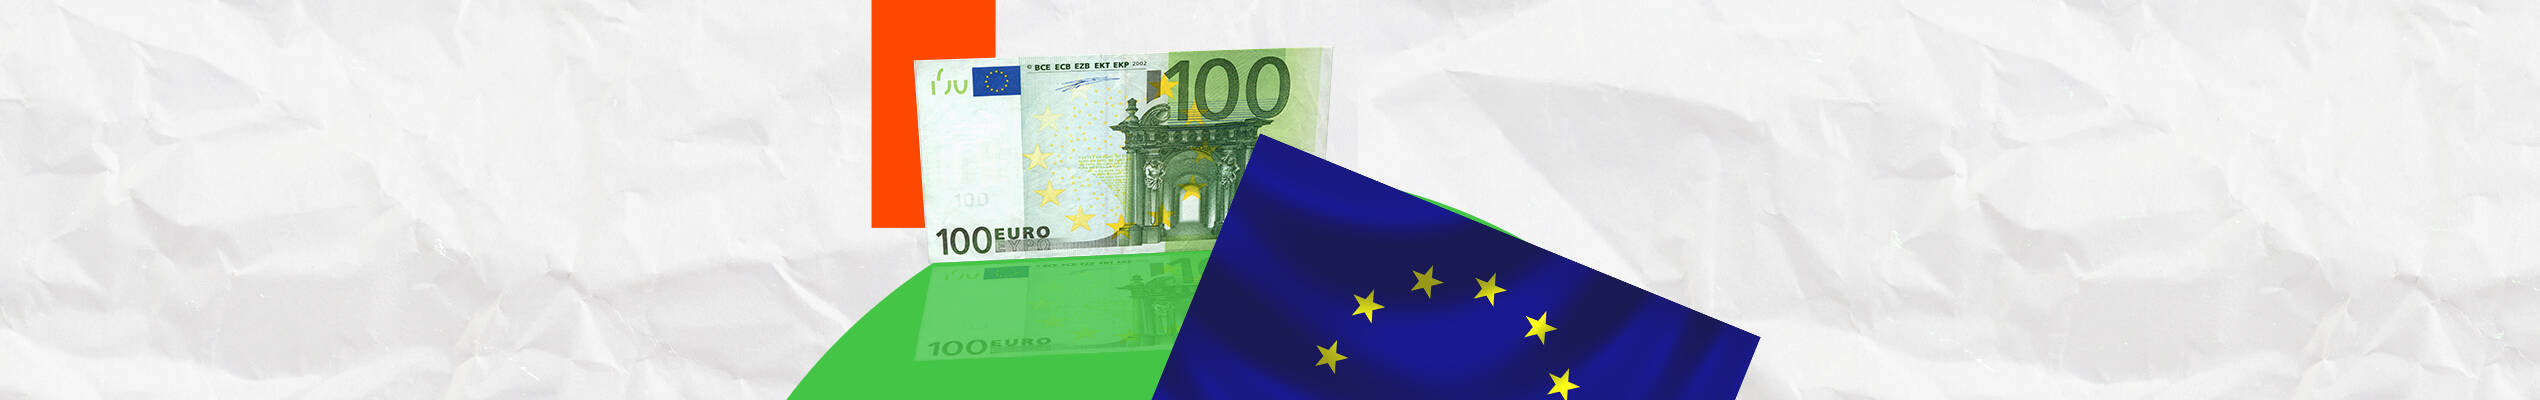 TD Securities: sell euro, buy dollar